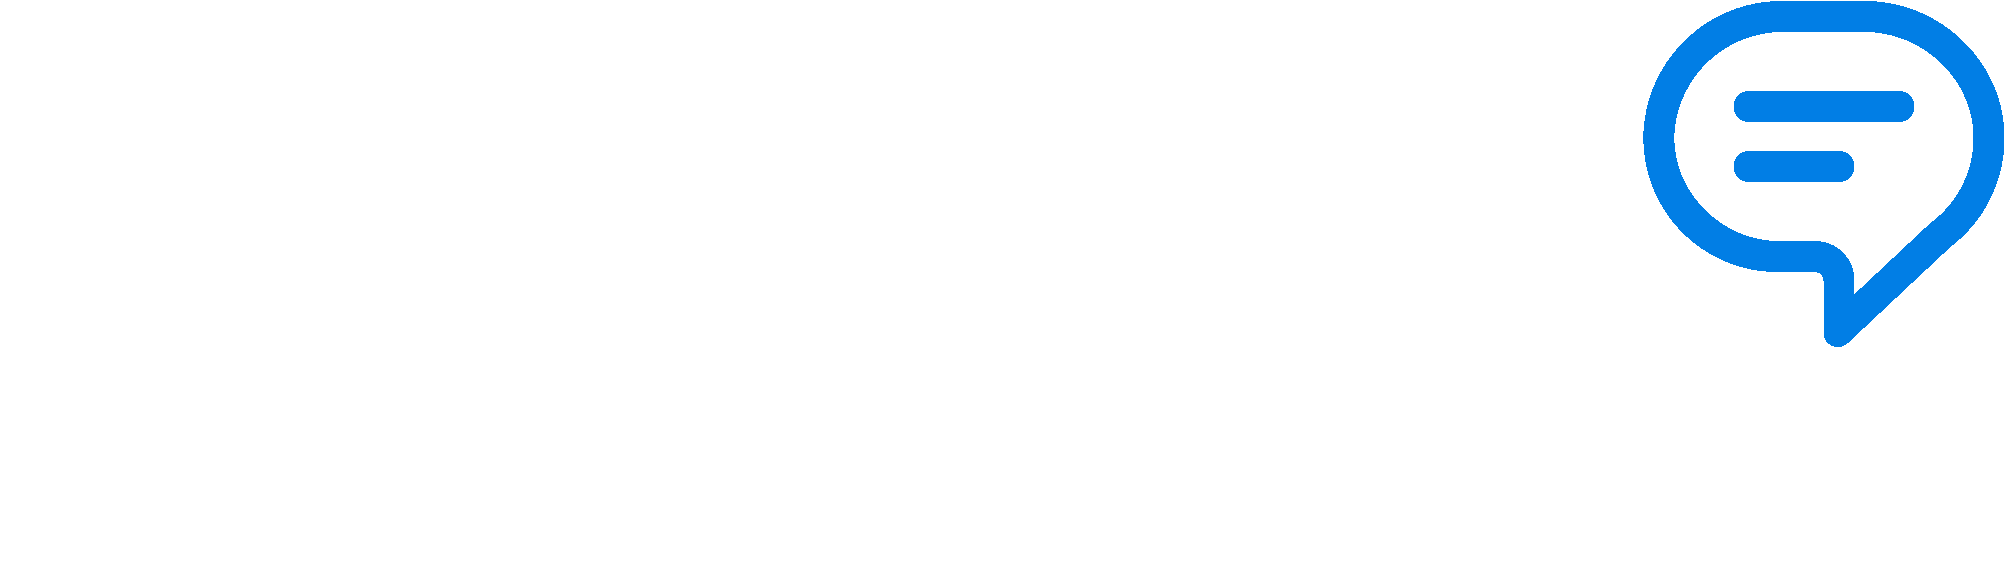 kontac-logo